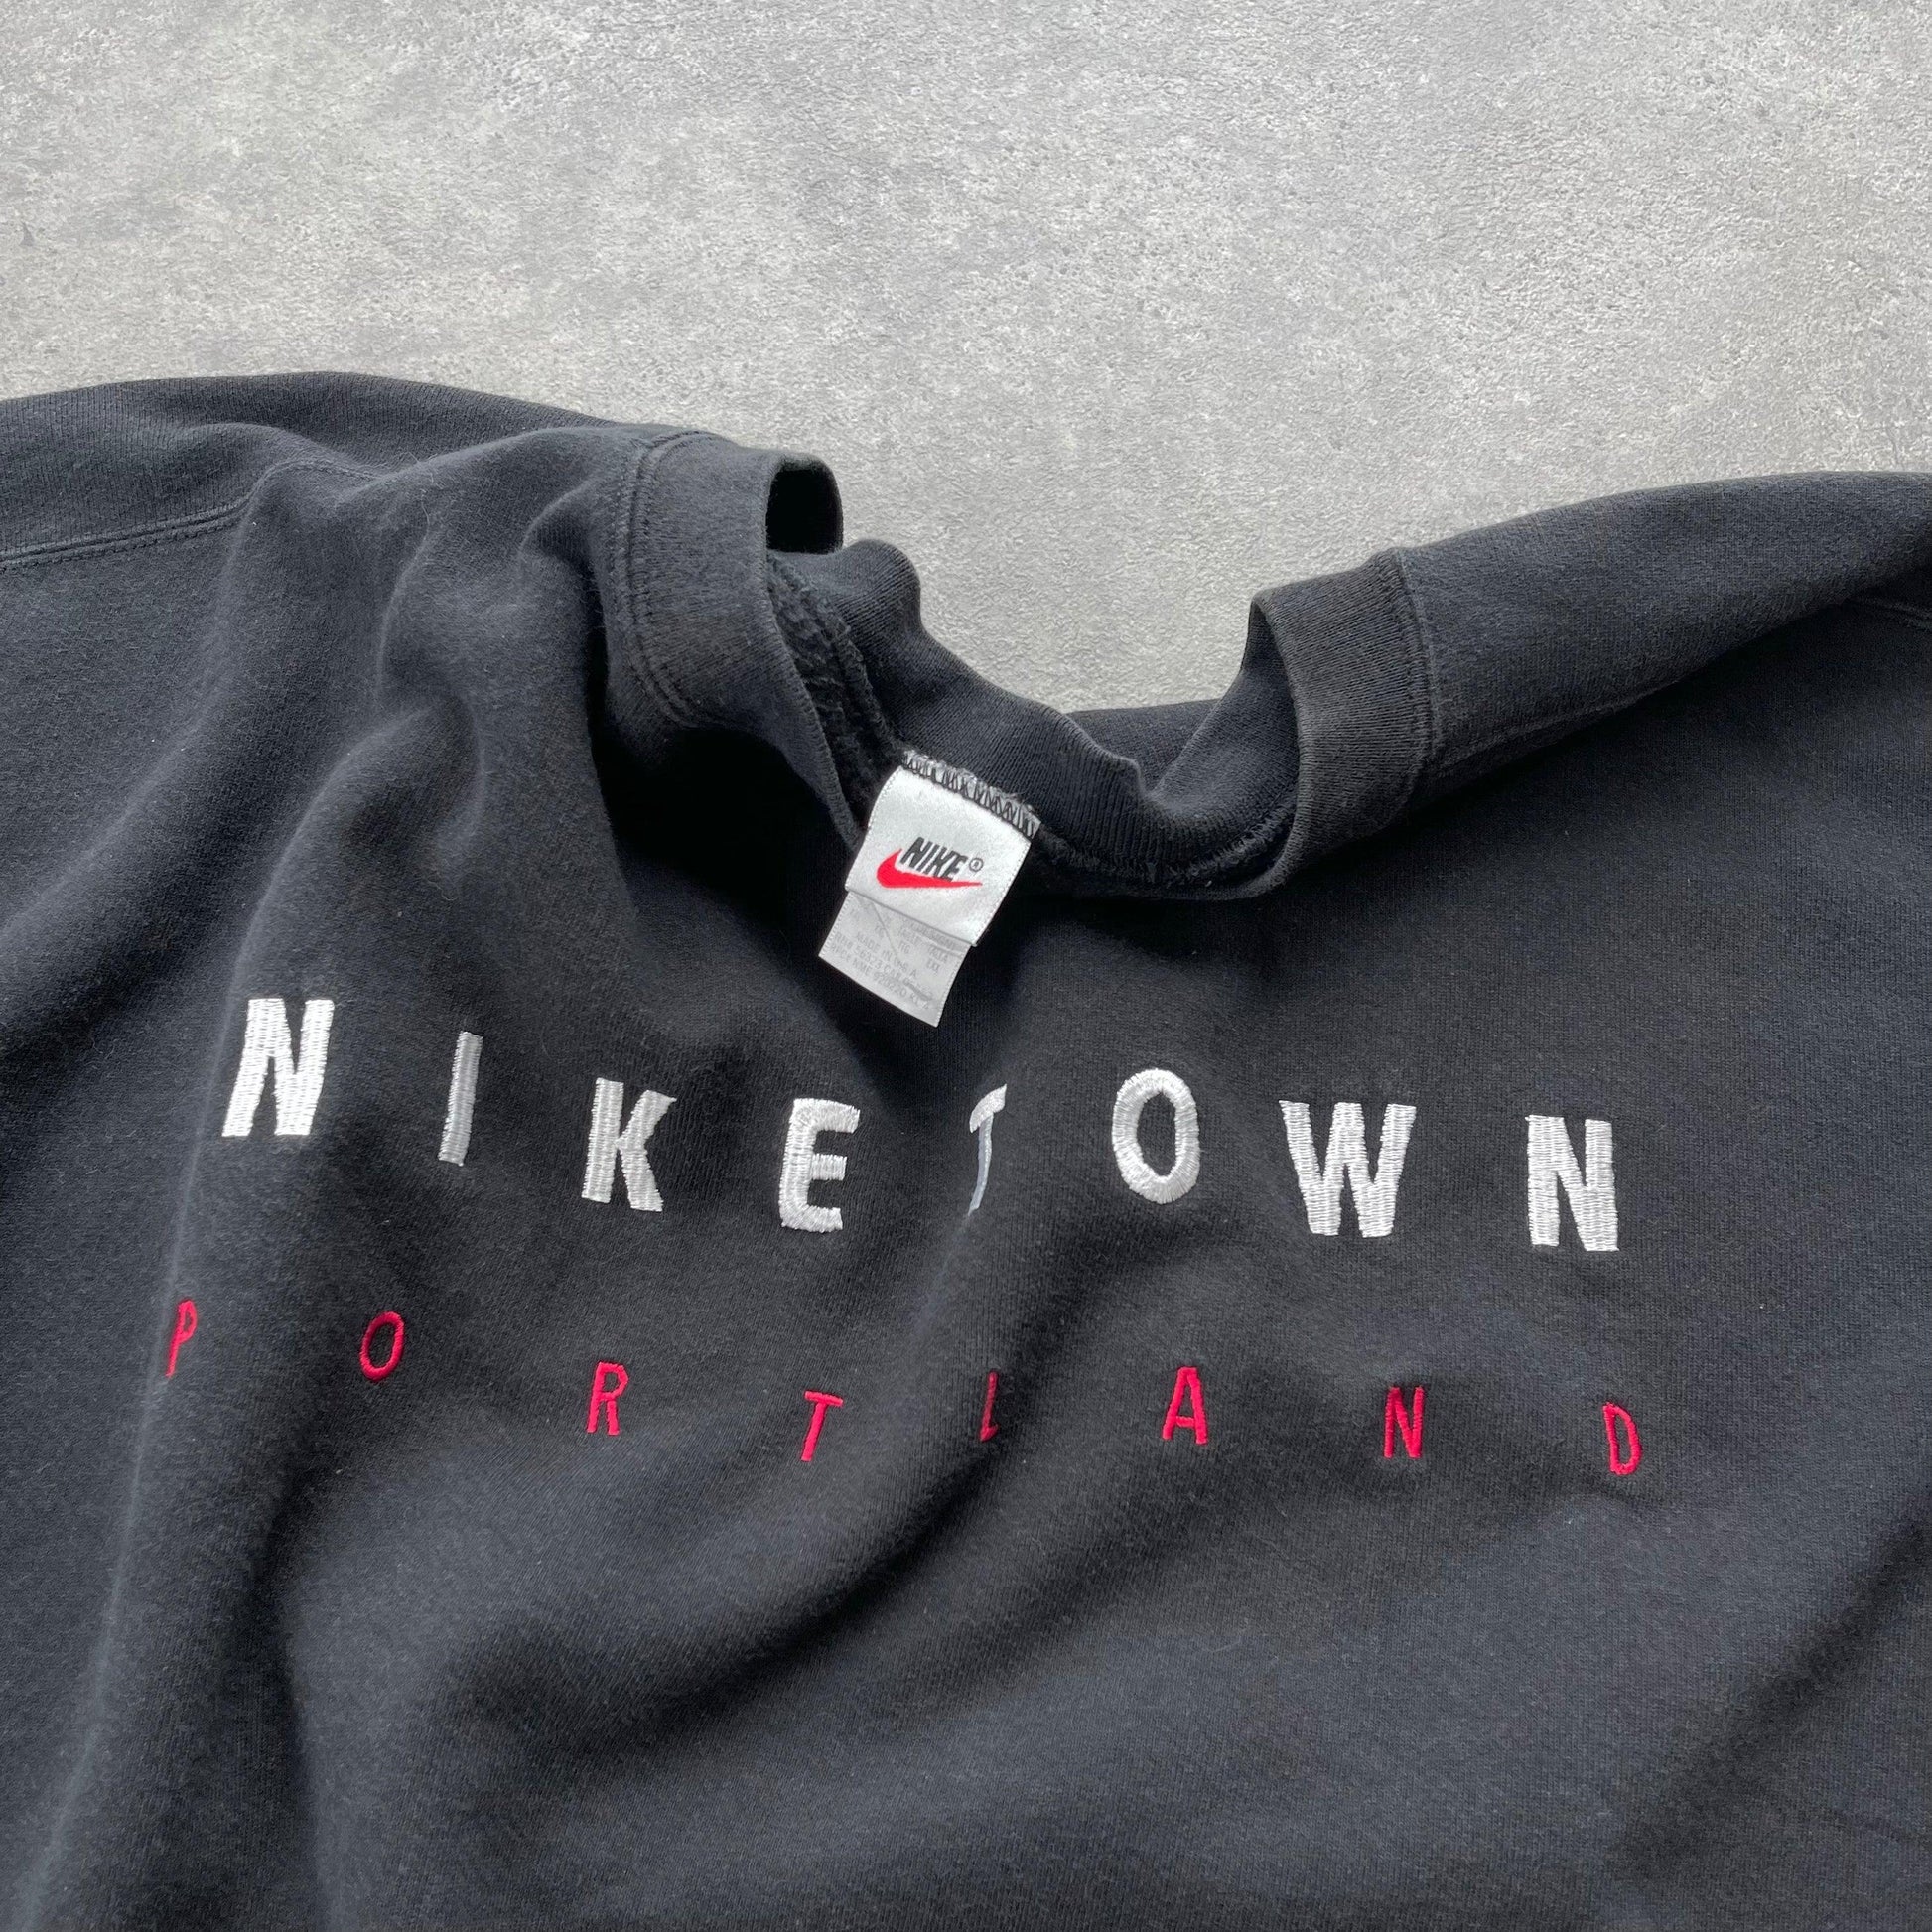 Nike Town Portland RARE 1990s heavyweight embroidered sweatshirt (XXL) - Known Source